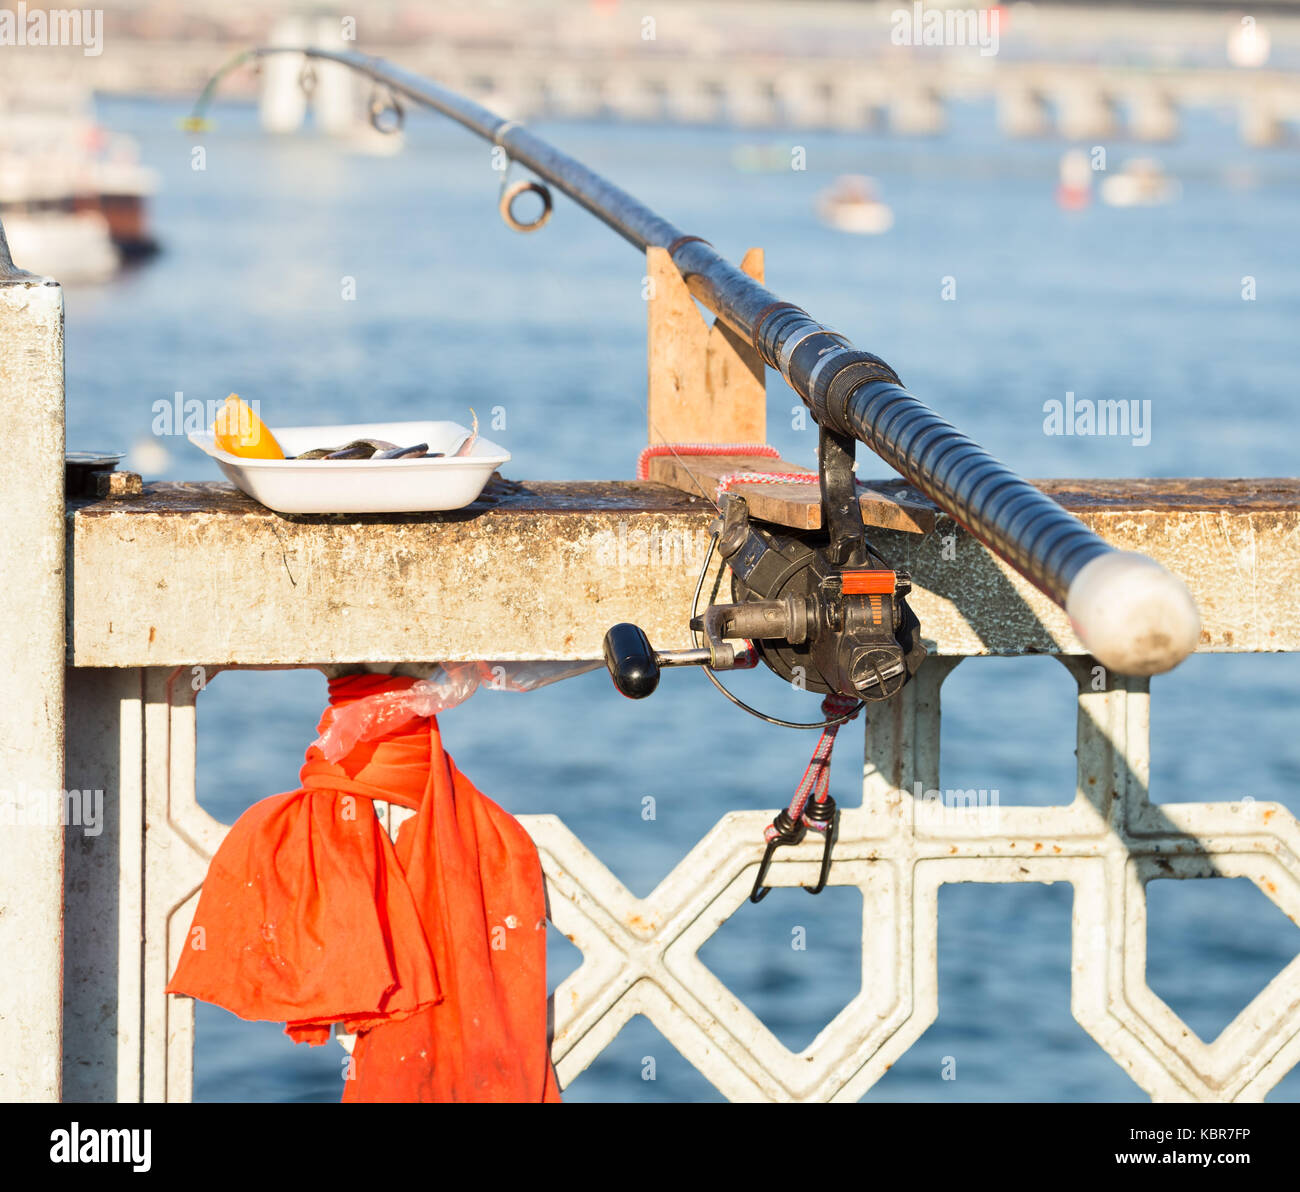 https://c8.alamy.com/comp/KBR7FP/fishing-rod-attached-to-the-railing-of-the-galata-bridge-istanbul-KBR7FP.jpg